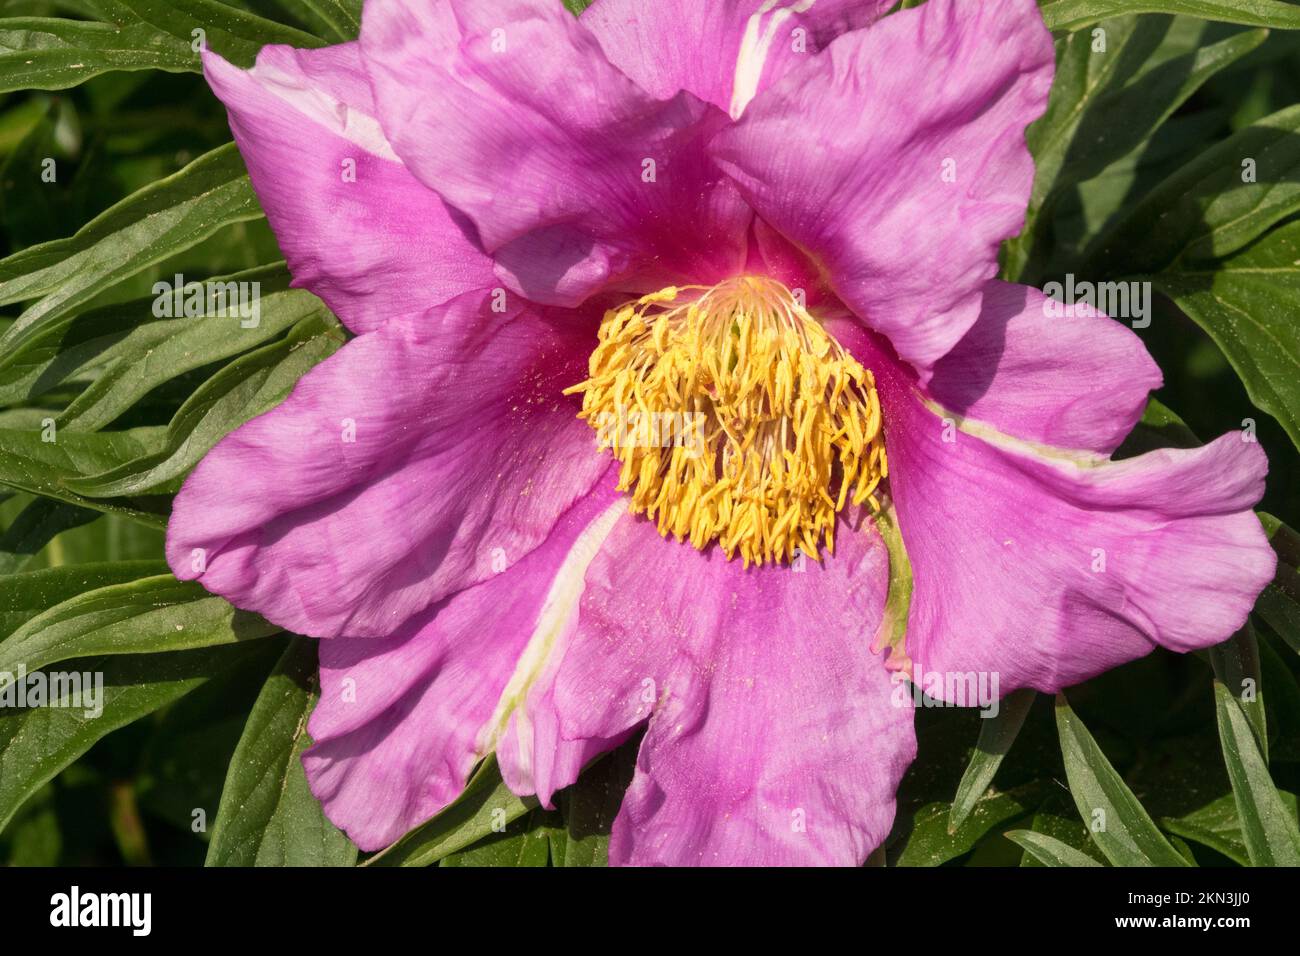 Magnifique, rose Paeonia anomala, Bloom Banque D'Images